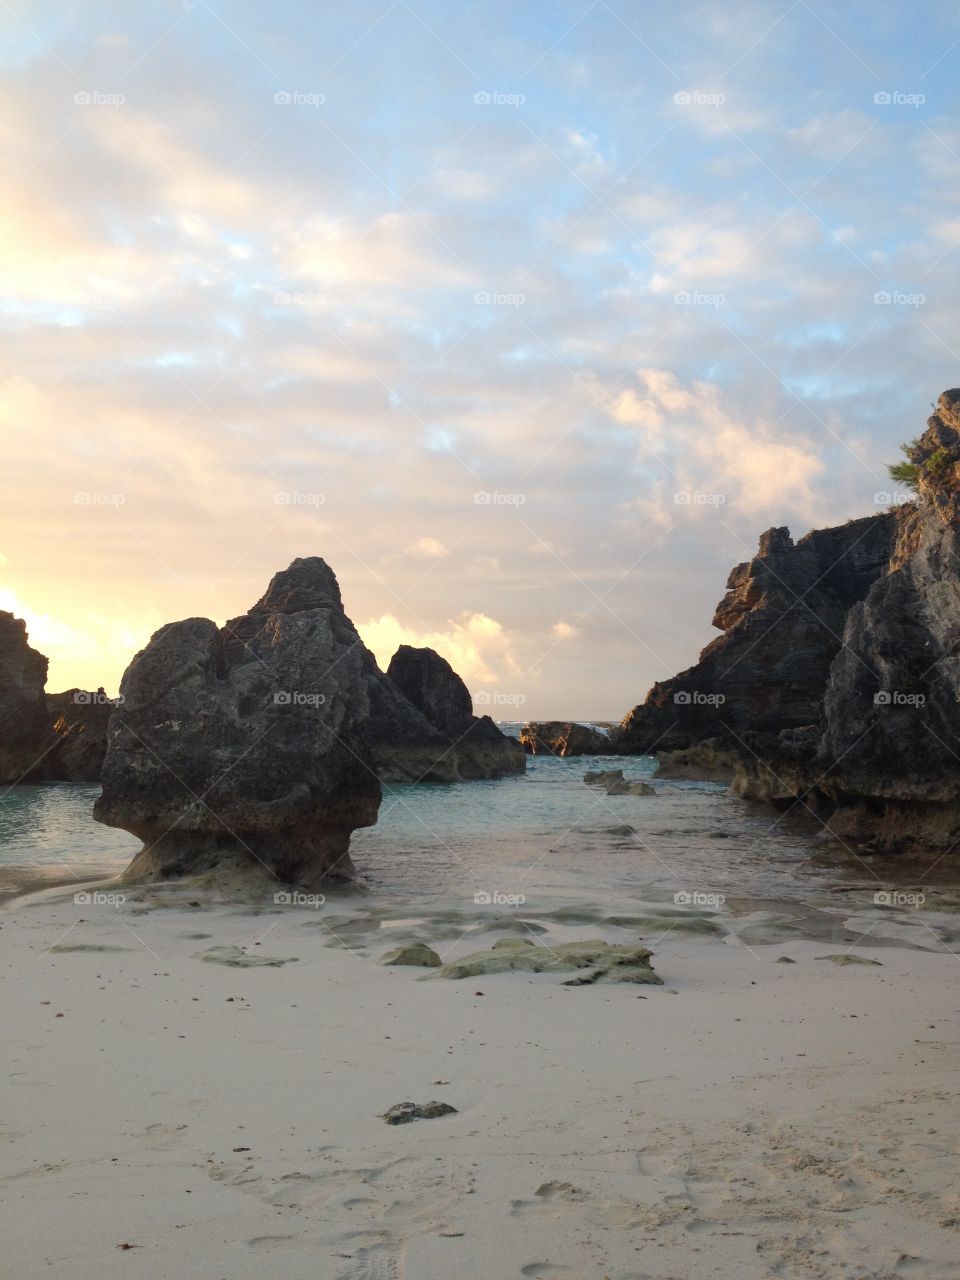 Rocks on the beach. Rocks on the beach in Bermude